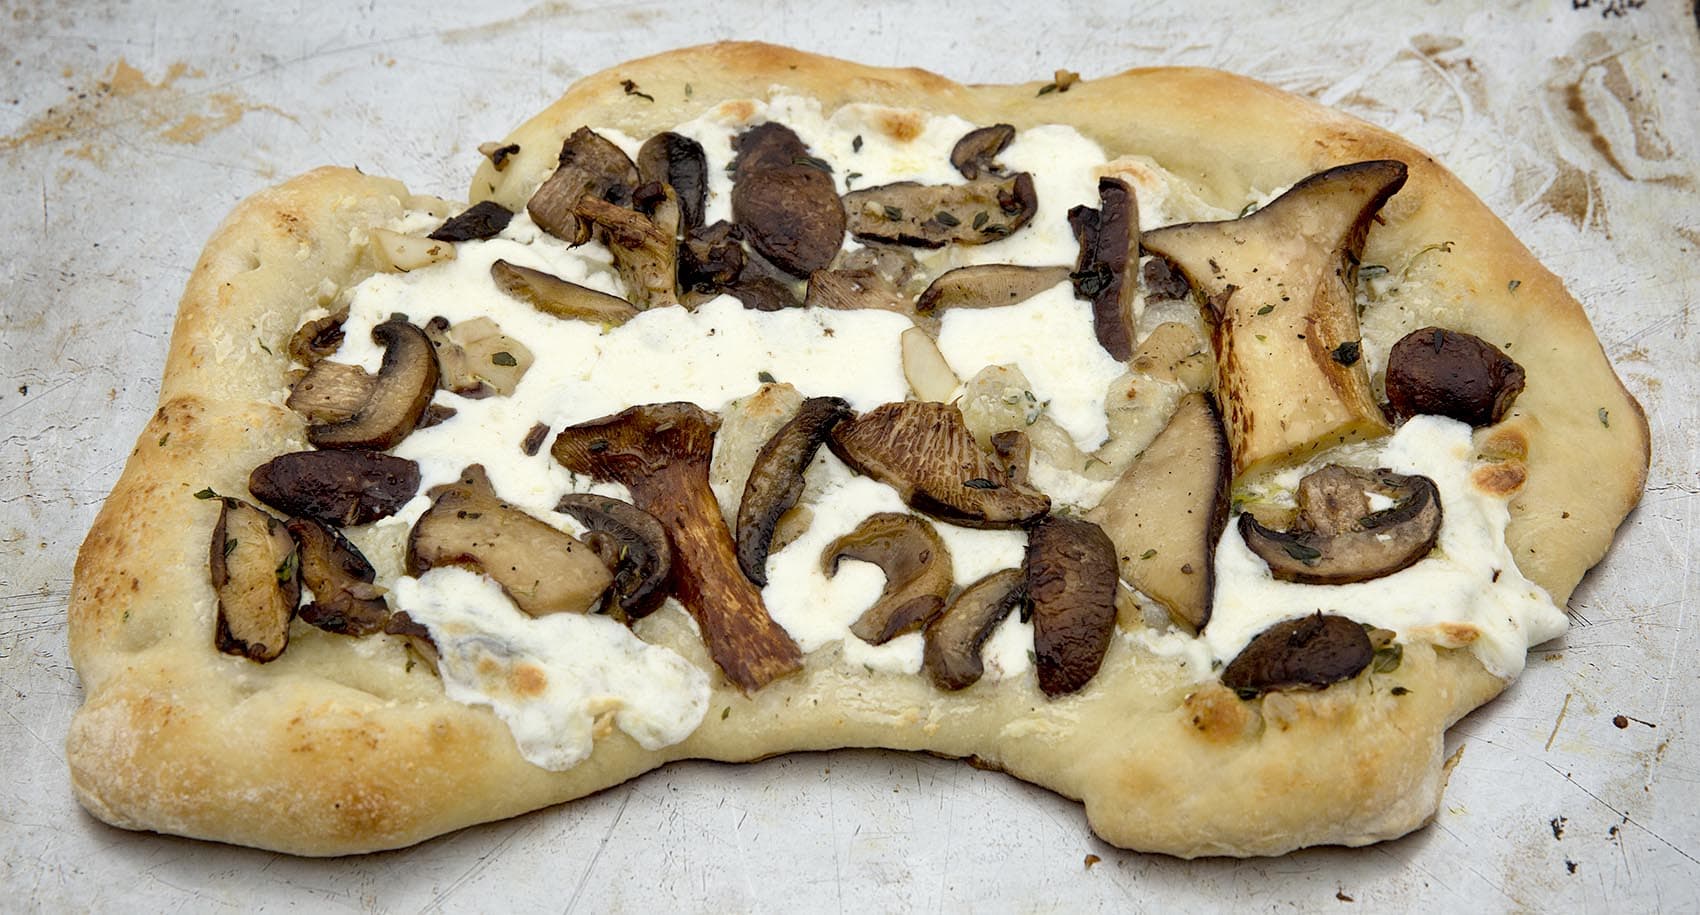 Kathy's quick mushroom and ricotta pizza. (Robin Lubbock/WBUR)